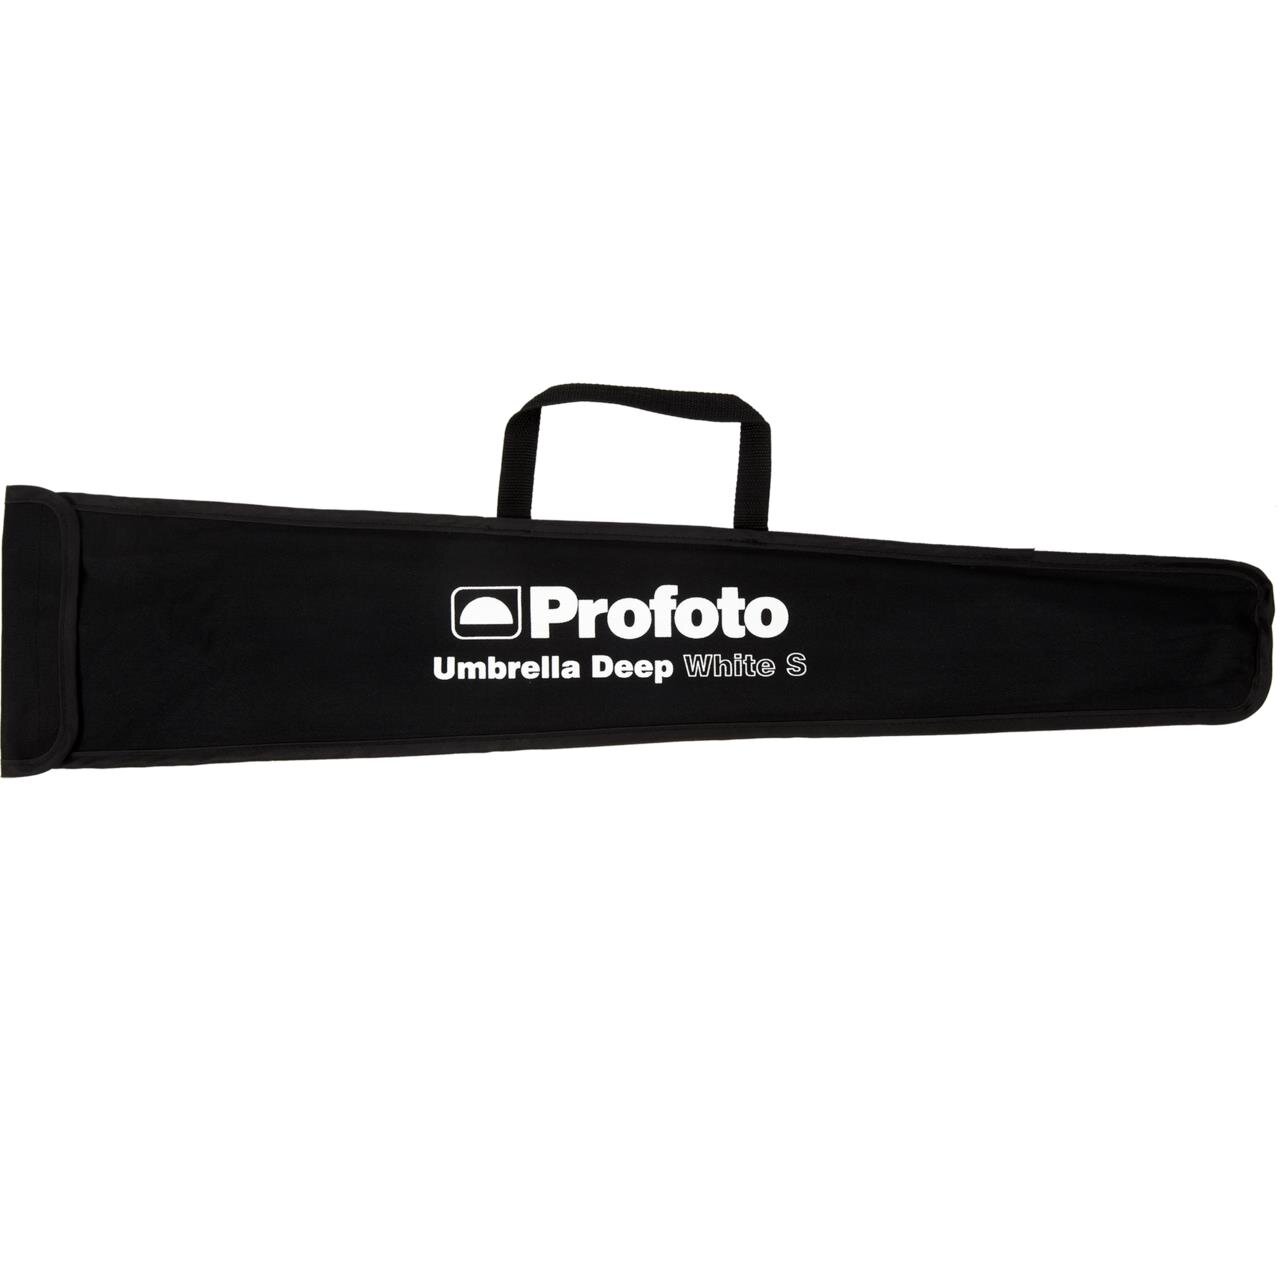 100983_f_Profoto-Umbrella-Deep-White-S-bag_ProductImage.png.jpeg